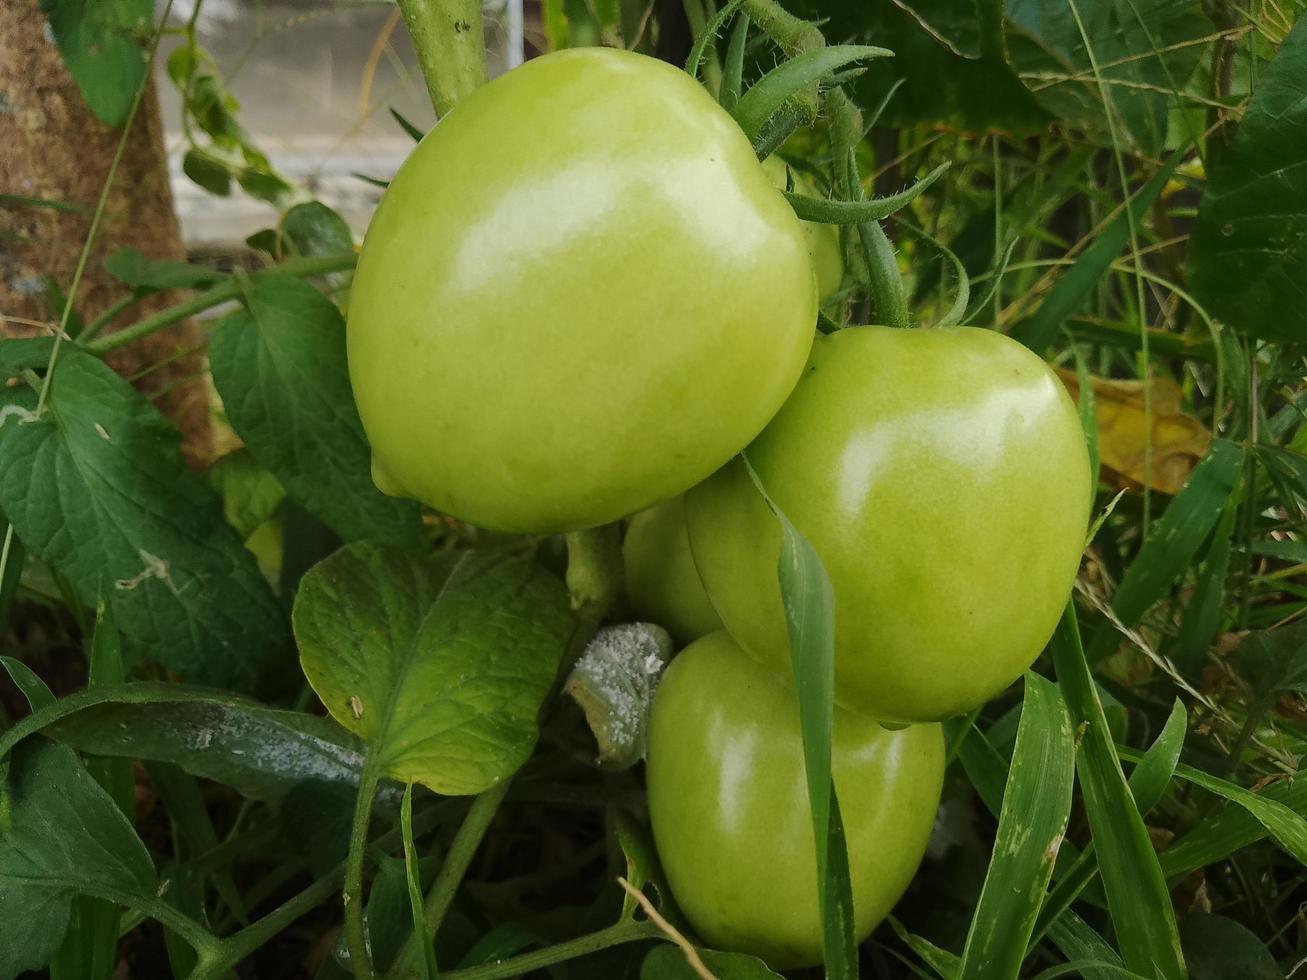 The Beautiful green tomato photo